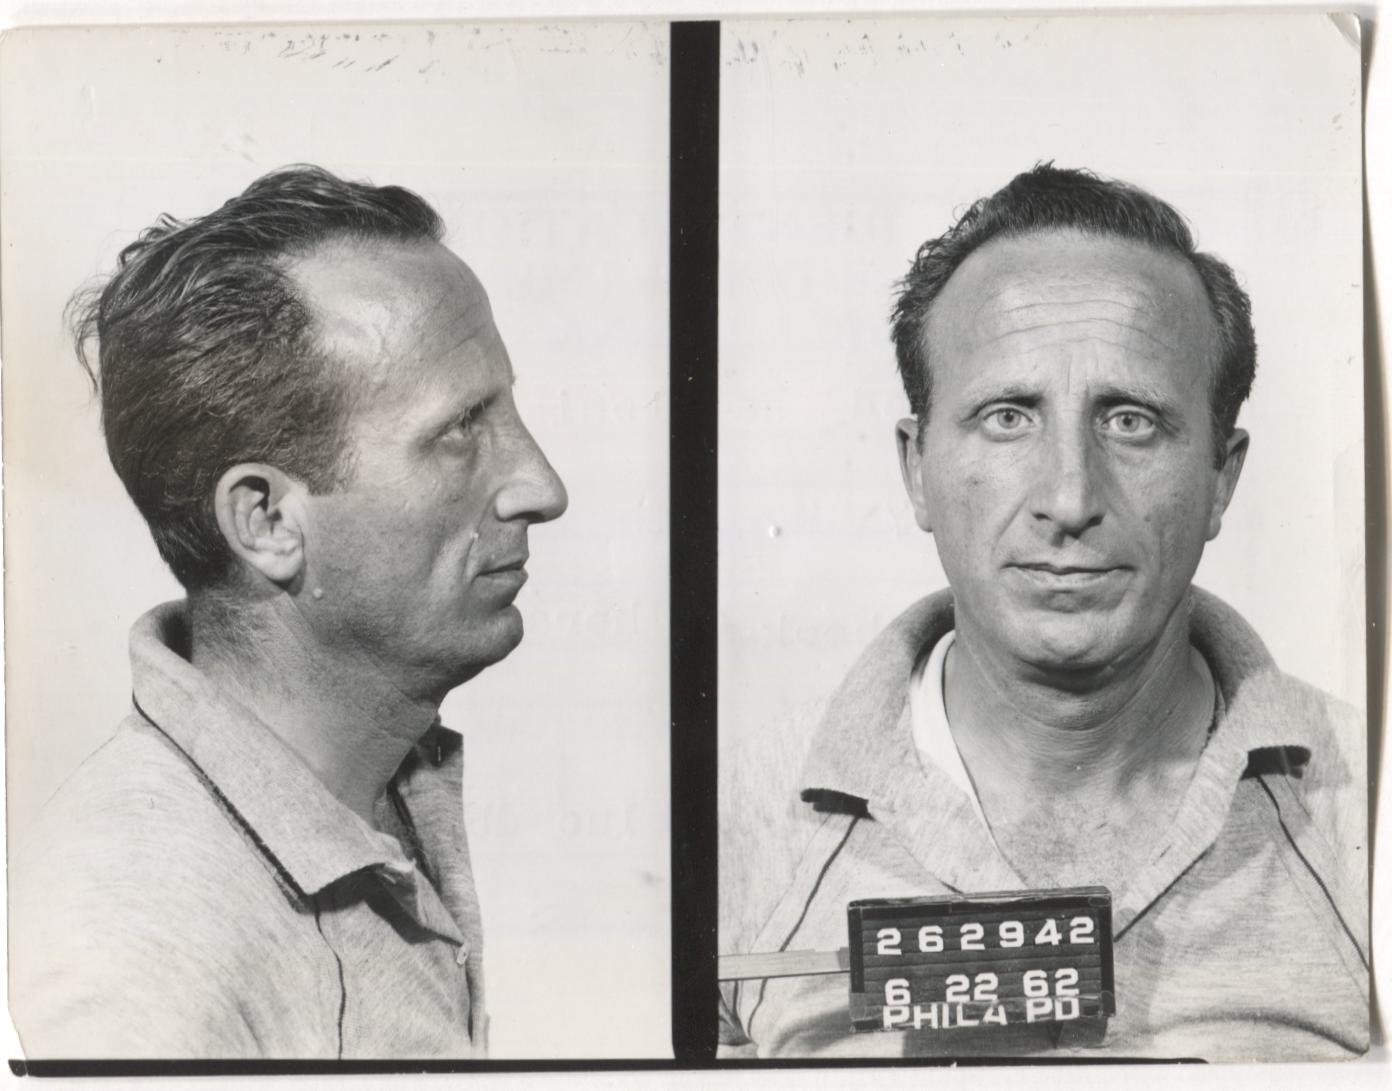 Alfred Nataloni Mugshot - Arrested on 6/22/1962 for Handbooking on Horses